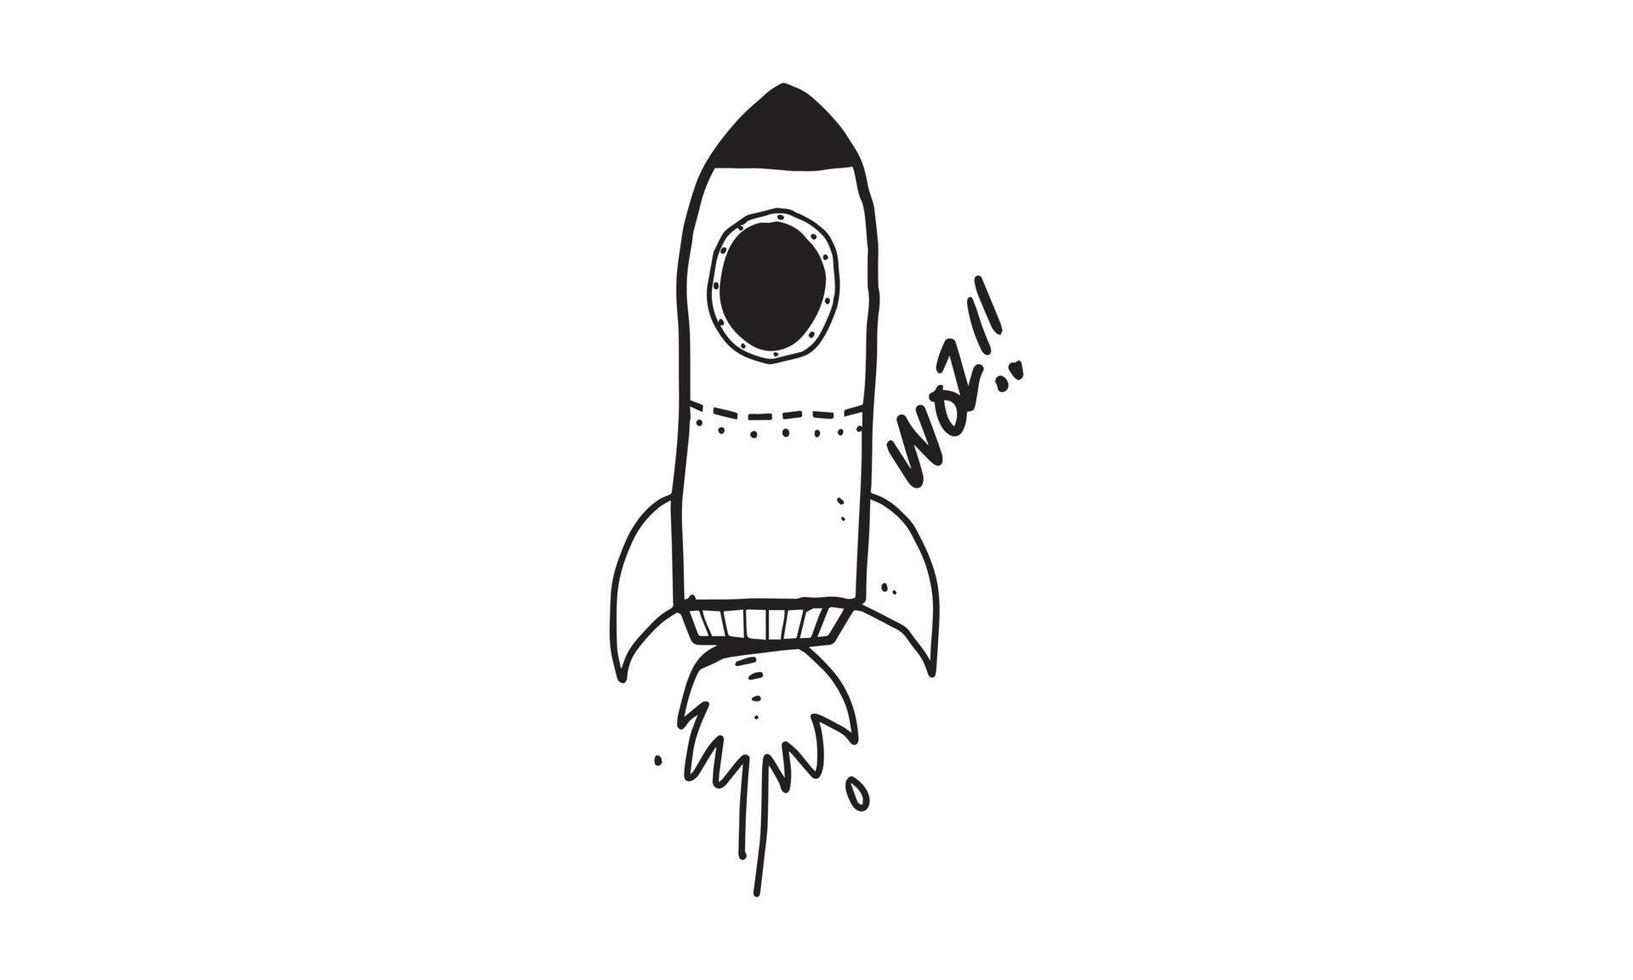 The rocket launch illustration in cartoon vector